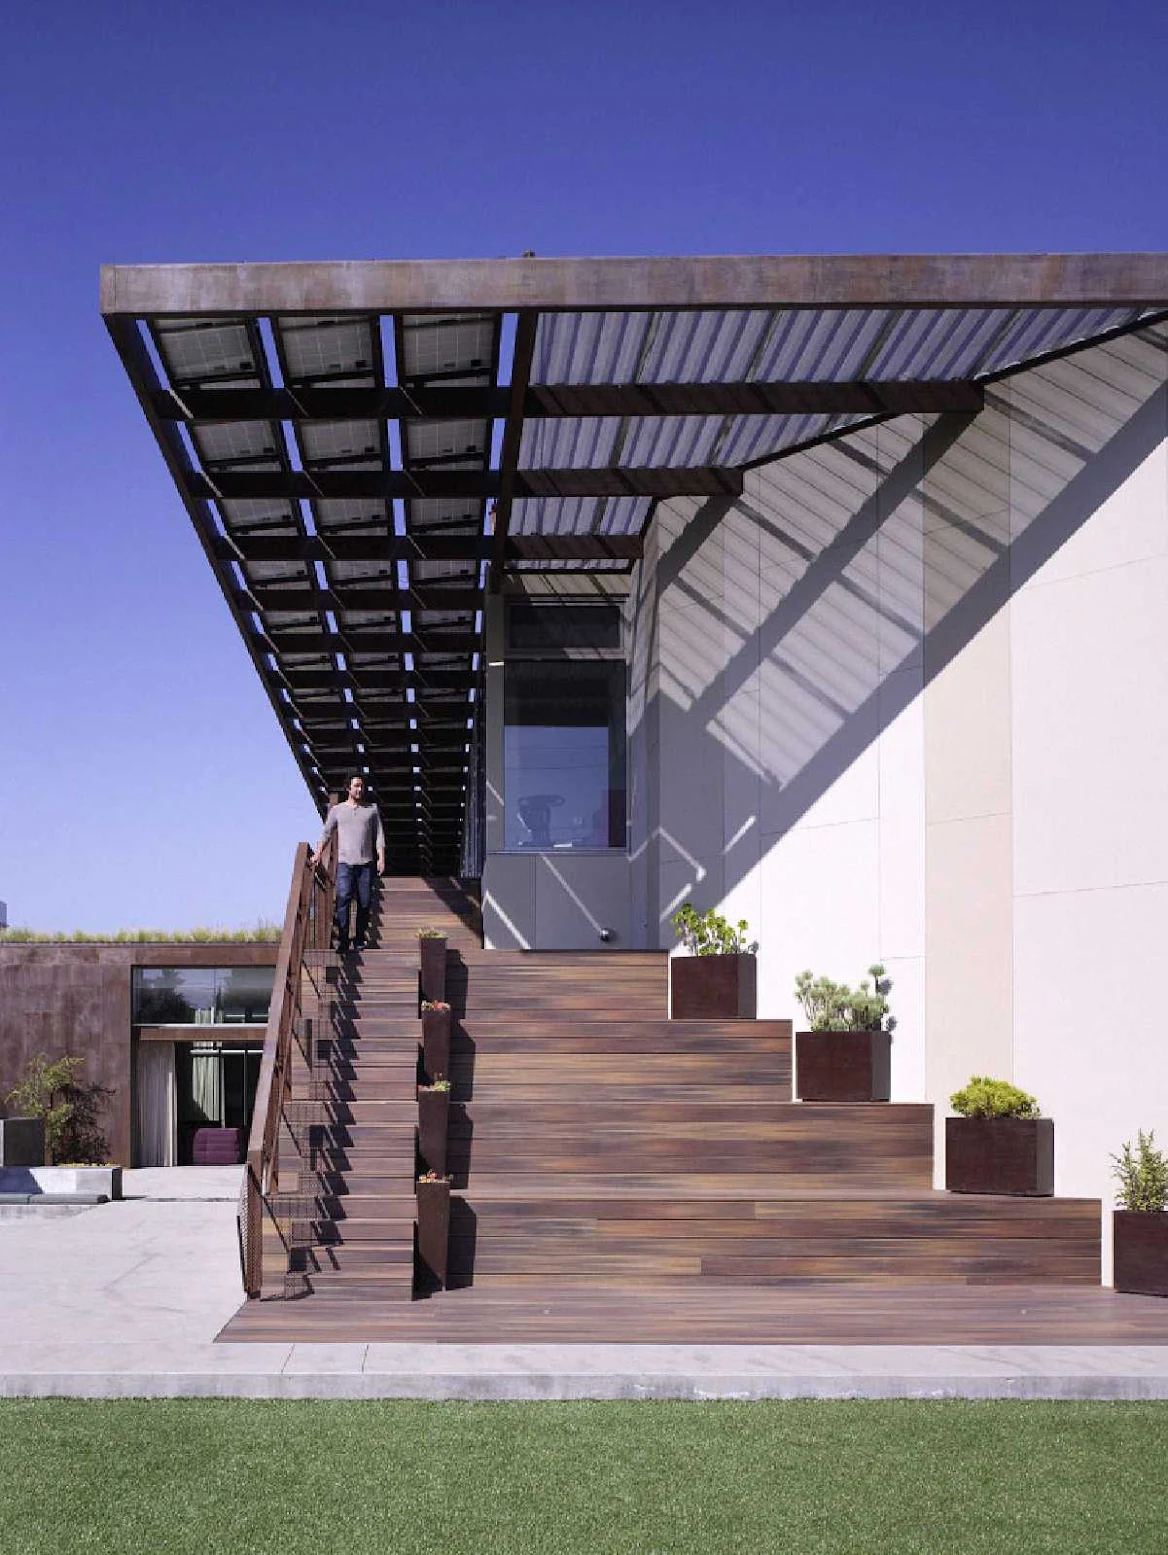 02 Yin-Yang House by Brooks + Scarpa Architects